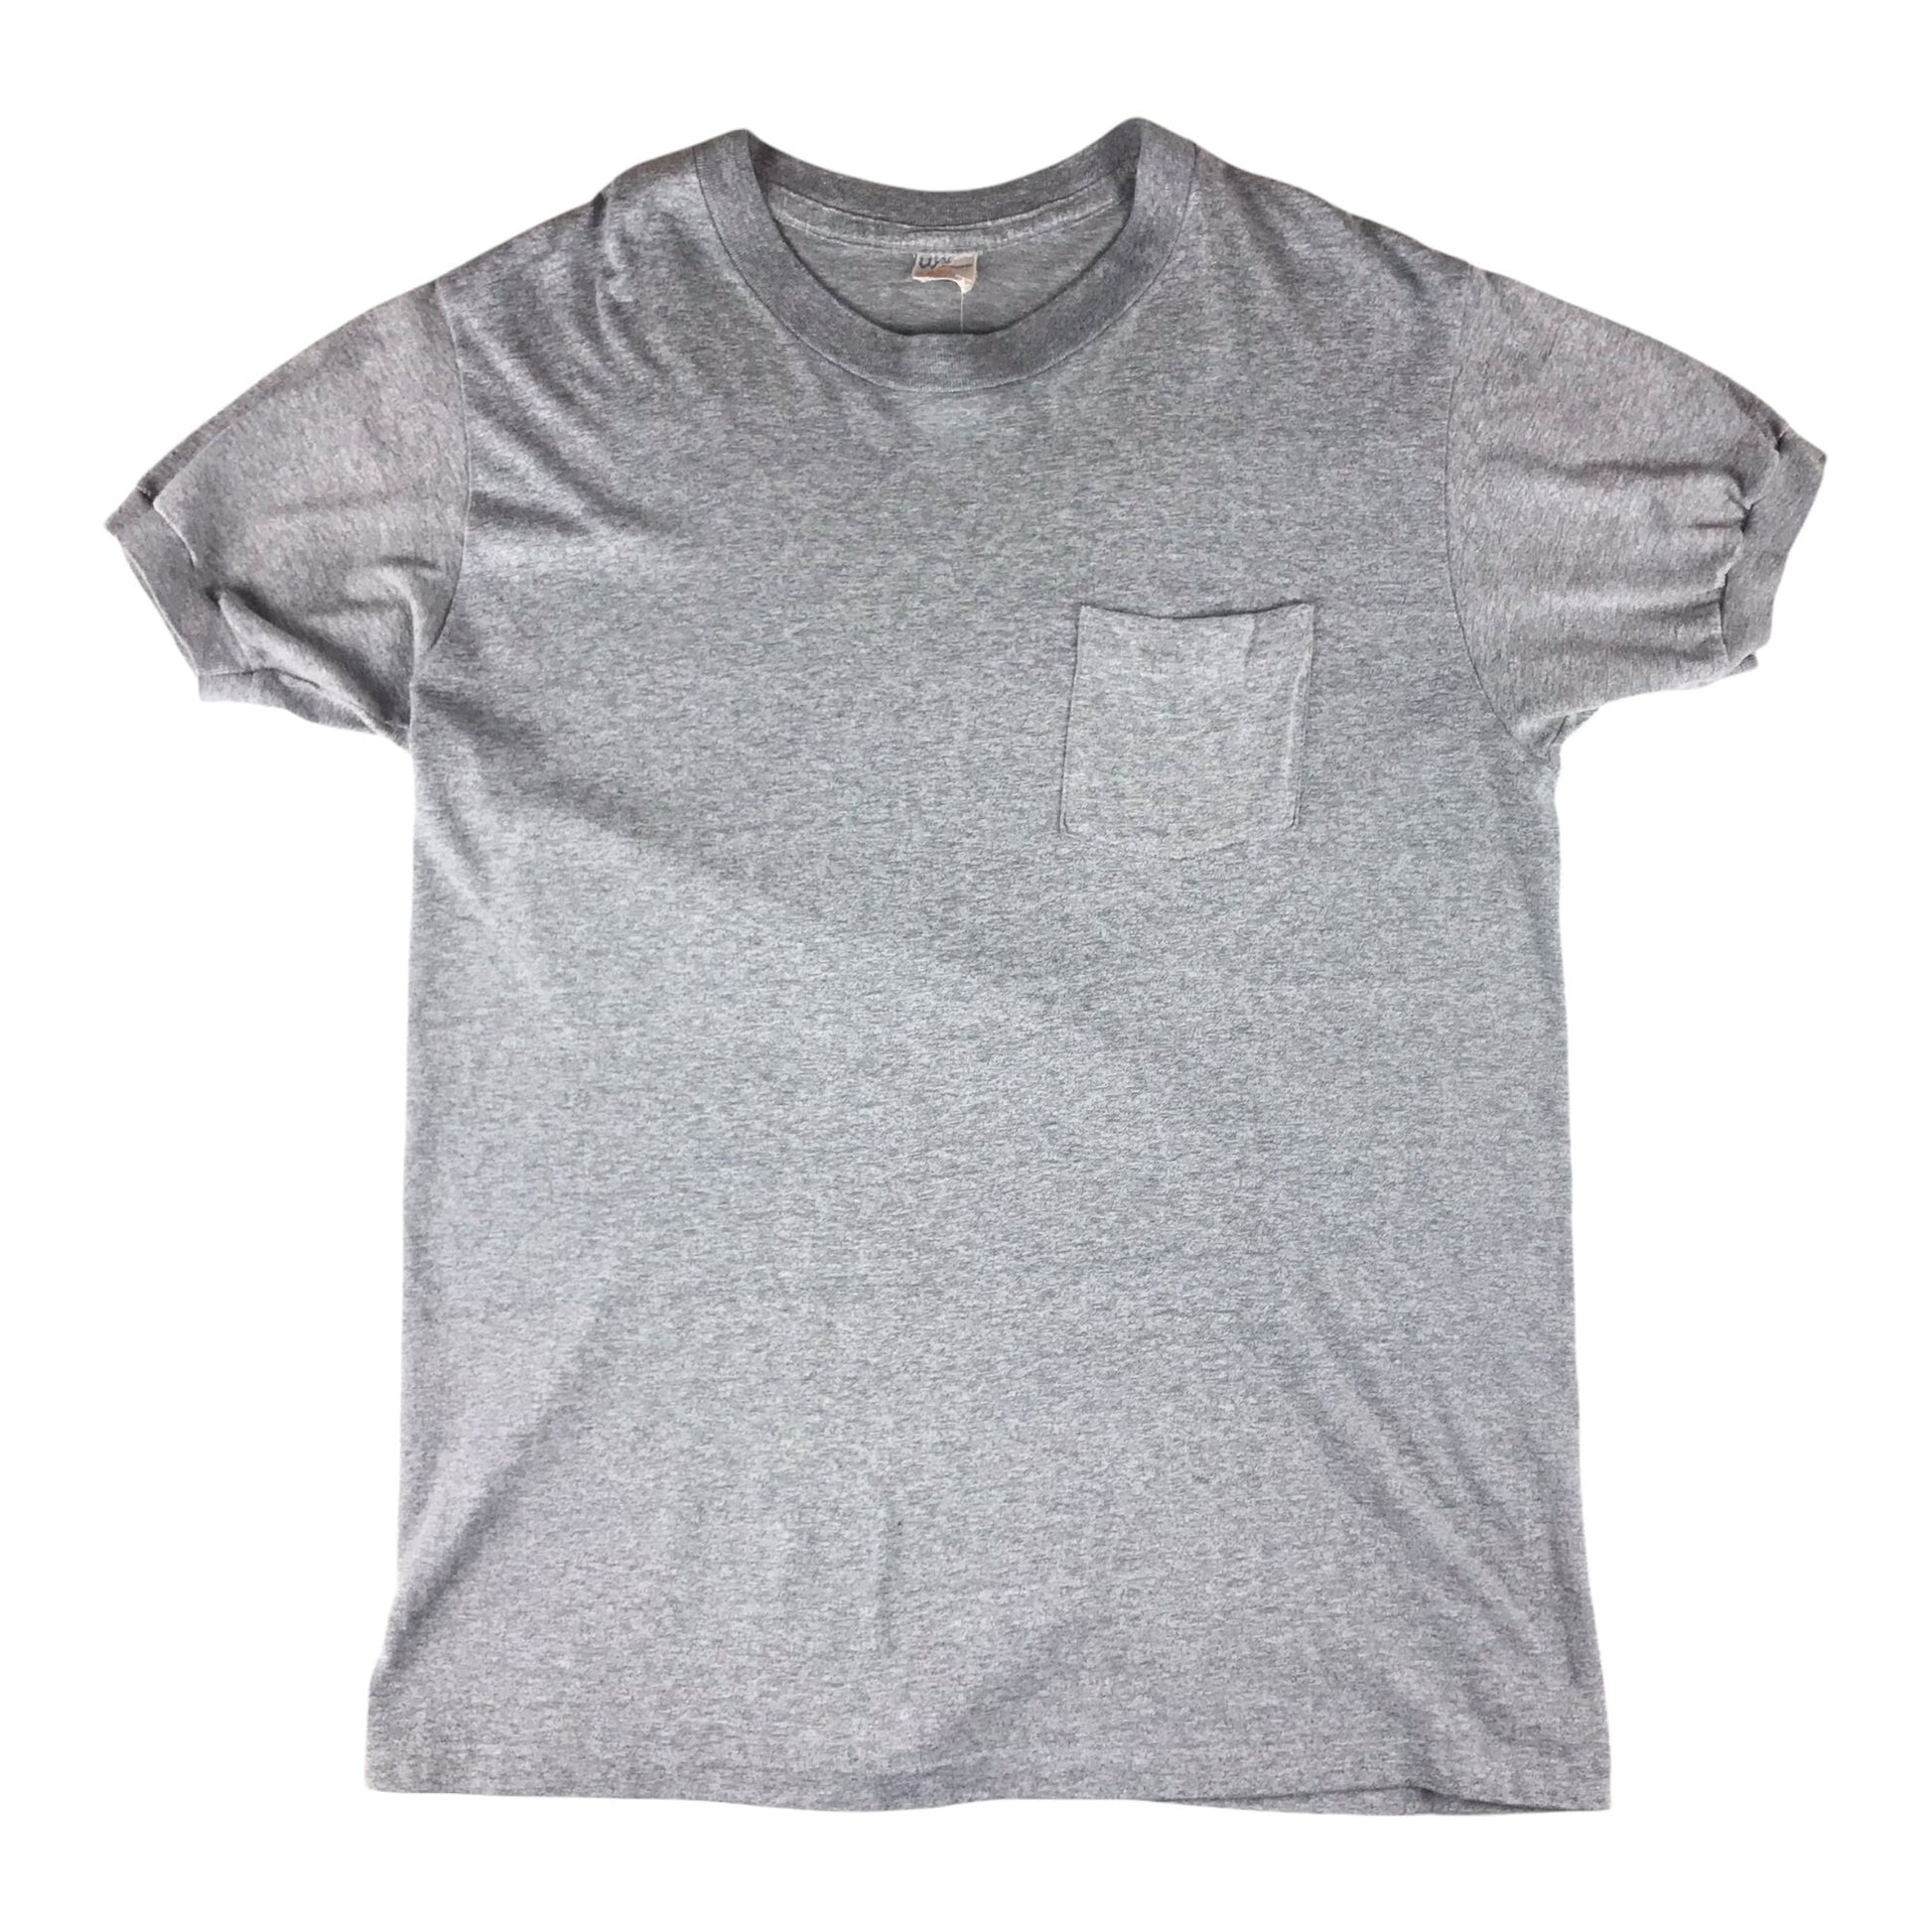 1980s/1990s Mark's Work Warehouse Grey Pocket T-Shirt Size L